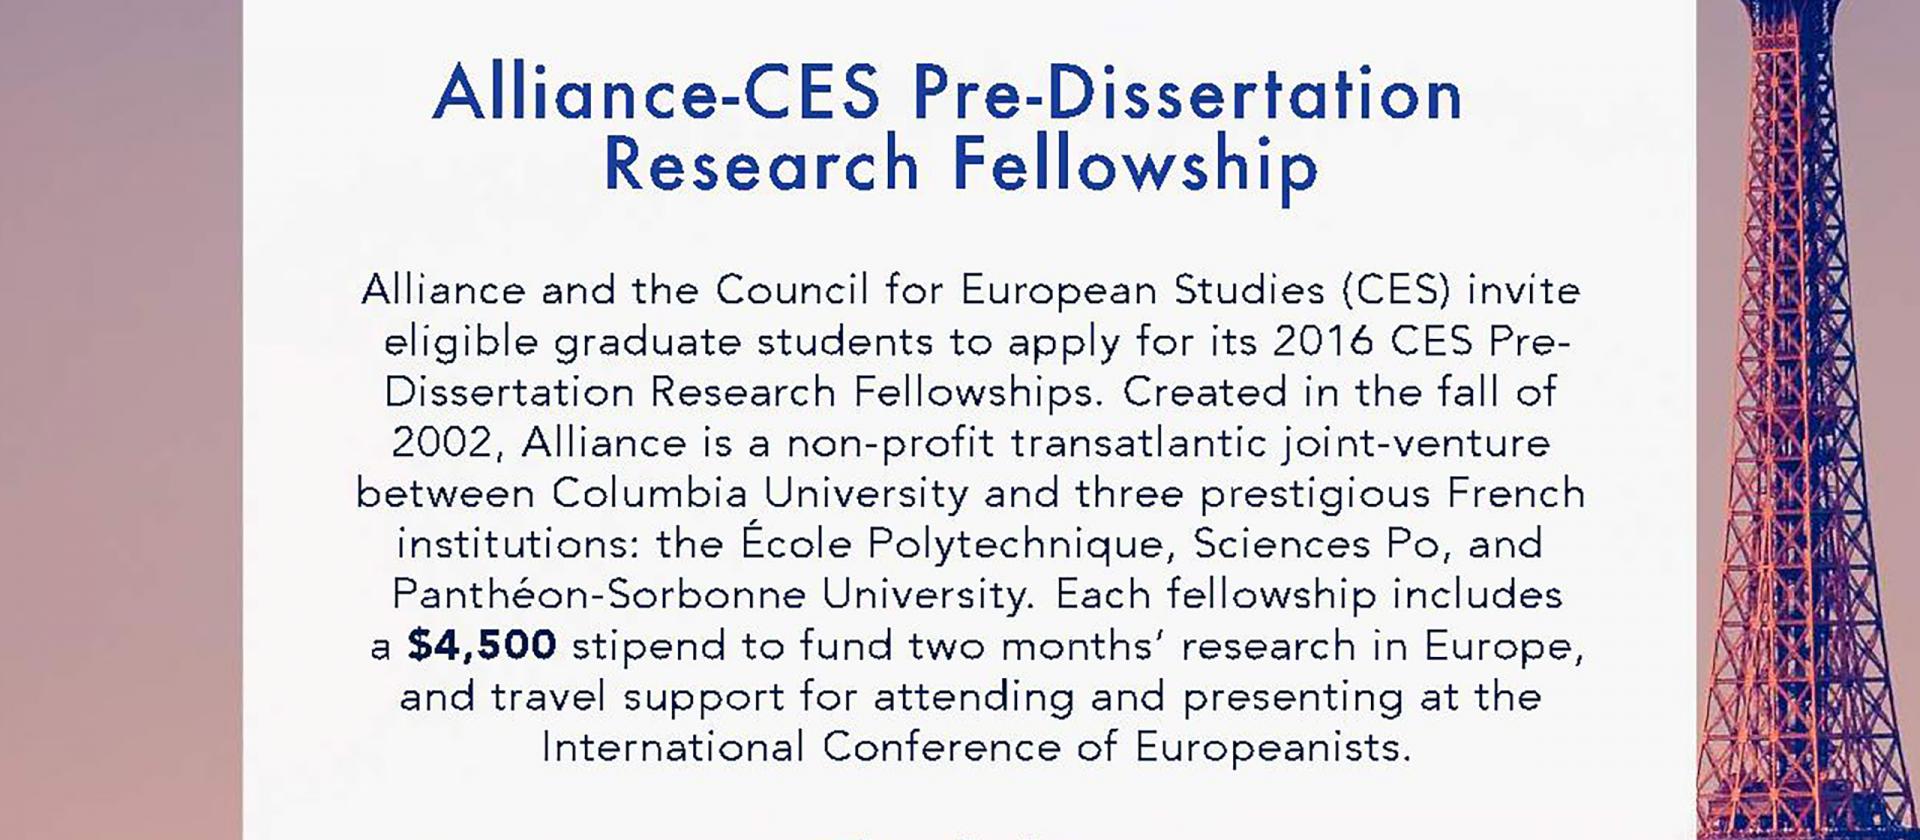 Alliance-CES Pre-Dissertation Research Fellowship Application